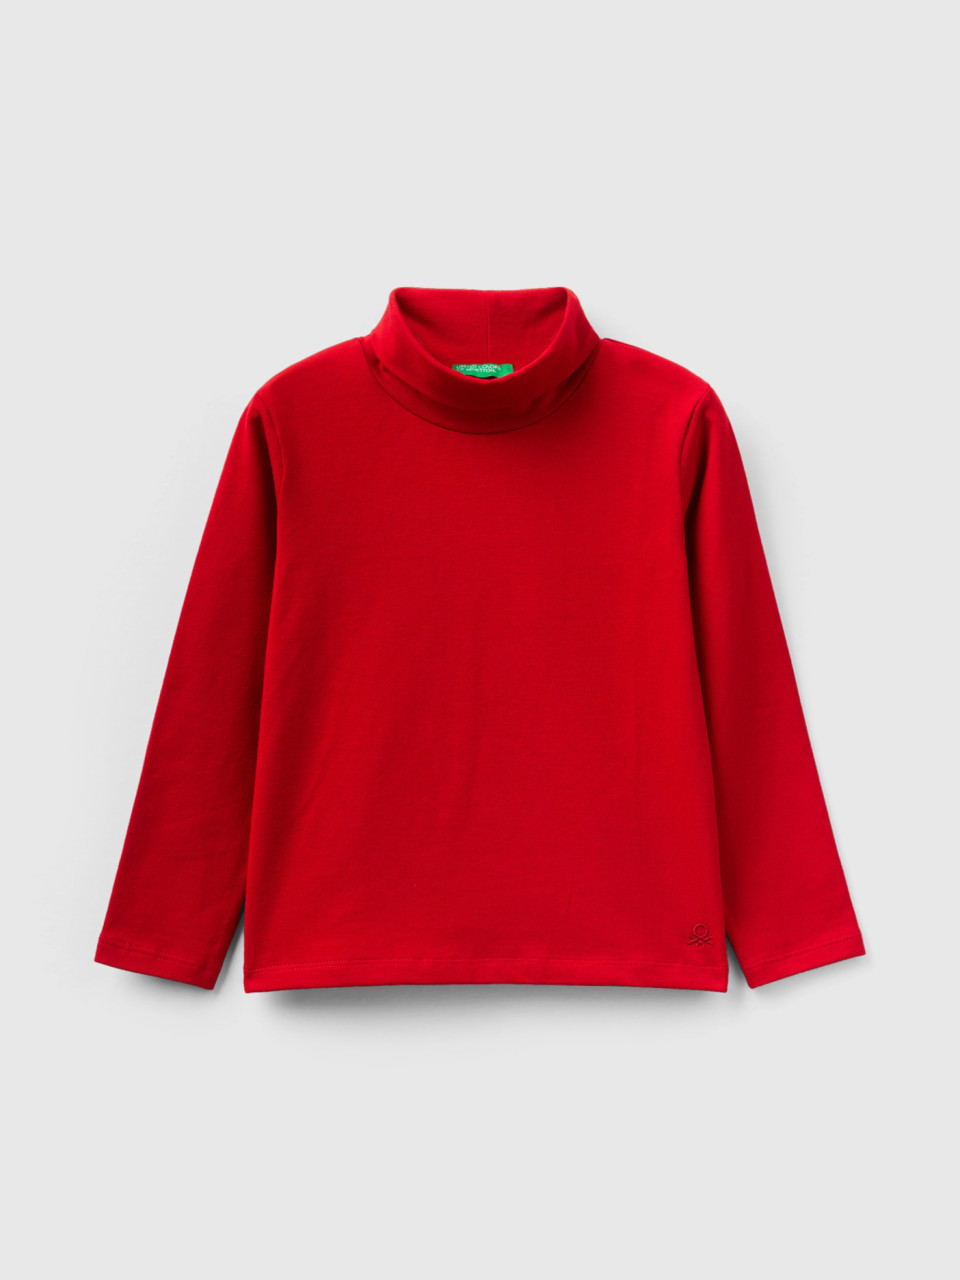 Benetton, Turtleneck T-shirt In Stretch Cotton, Red, Kids